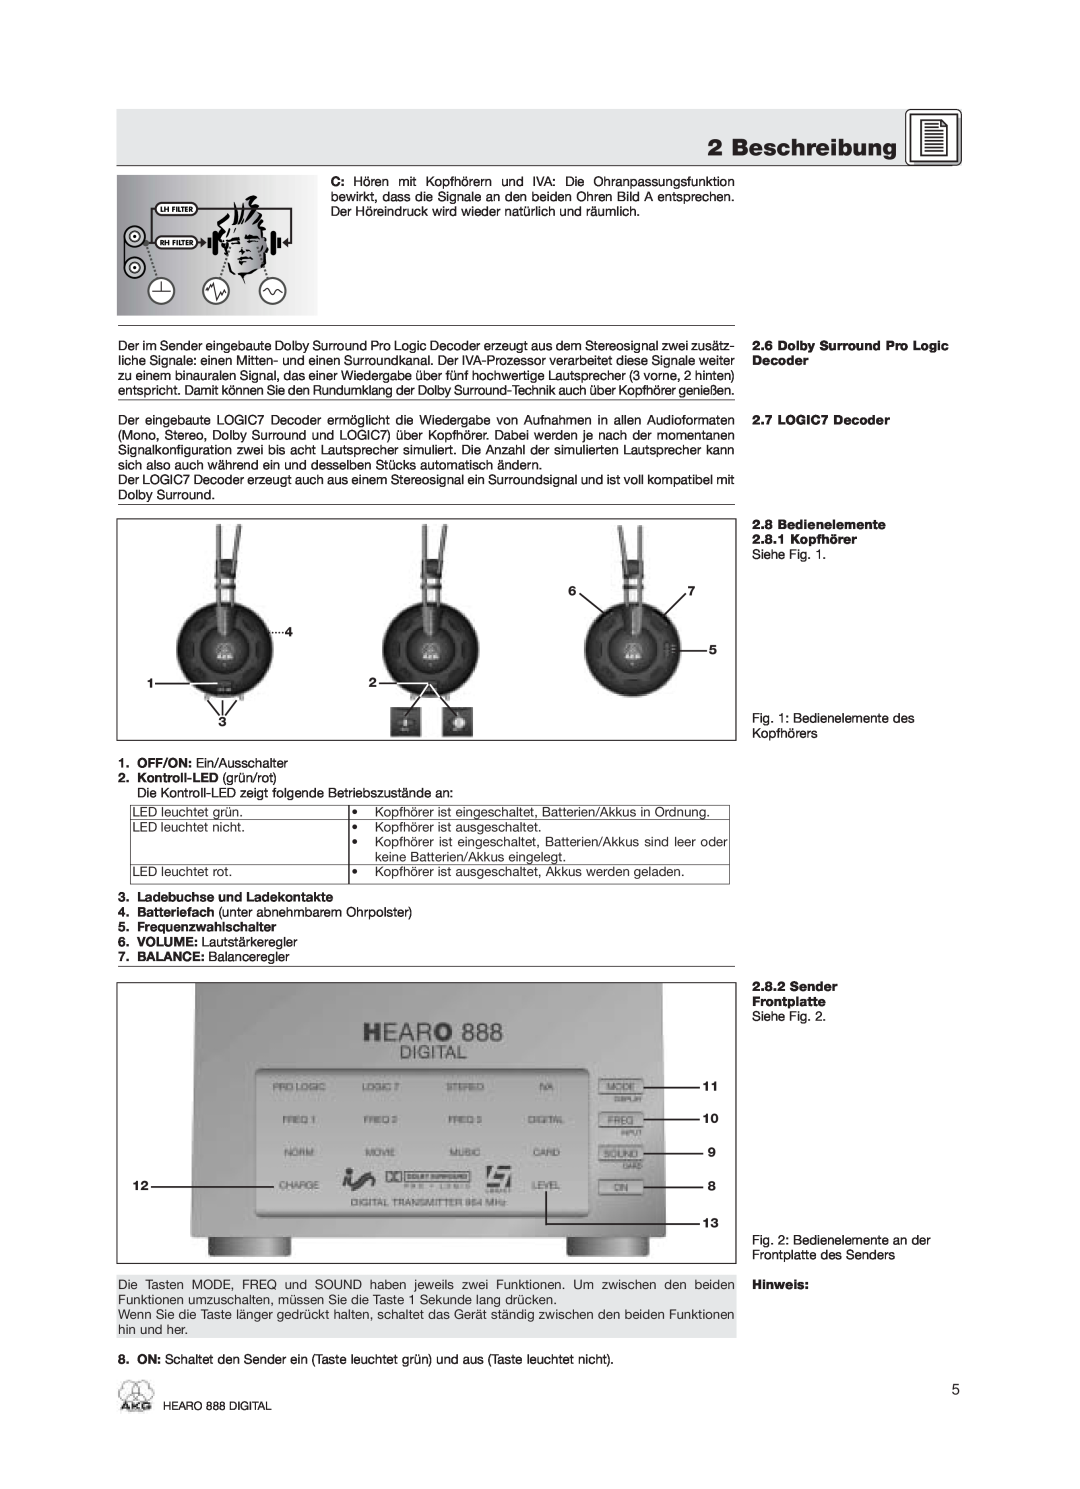 AKG Acoustics HEARO 888 specifications Beschreibung, Dolby Surround Pro Logic 